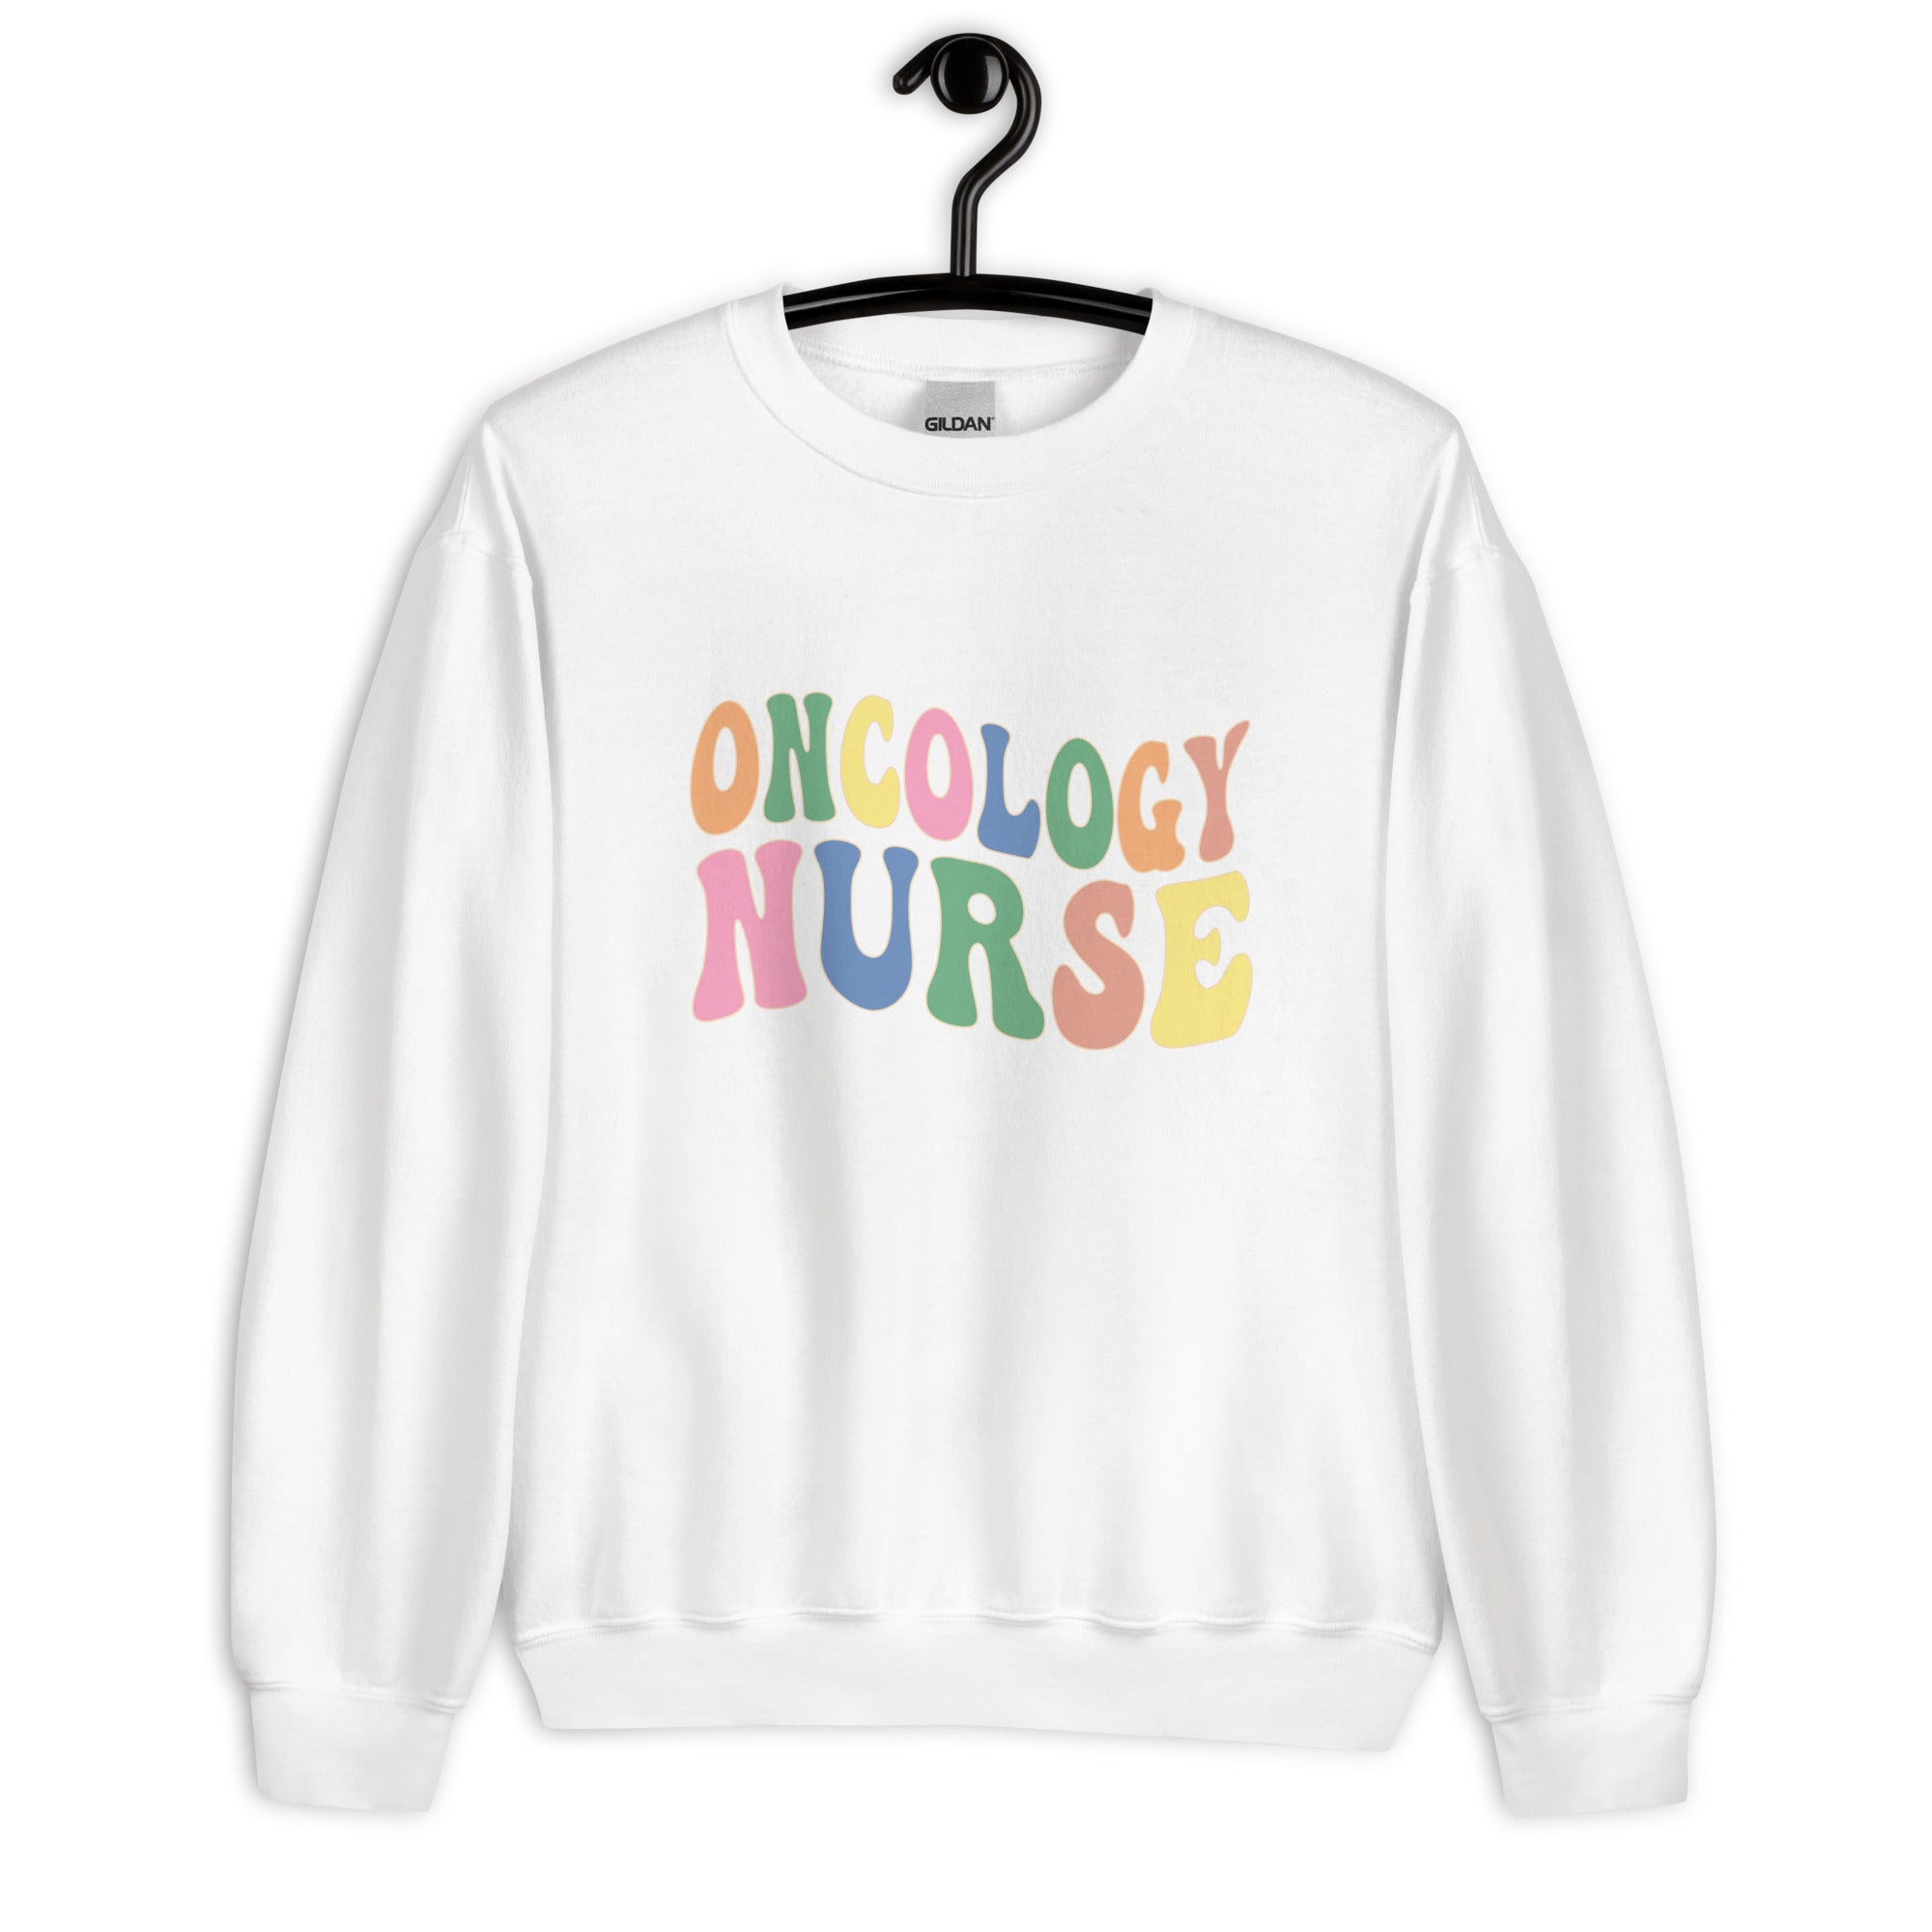 Oncology Nurse Unisex Sweatshirt